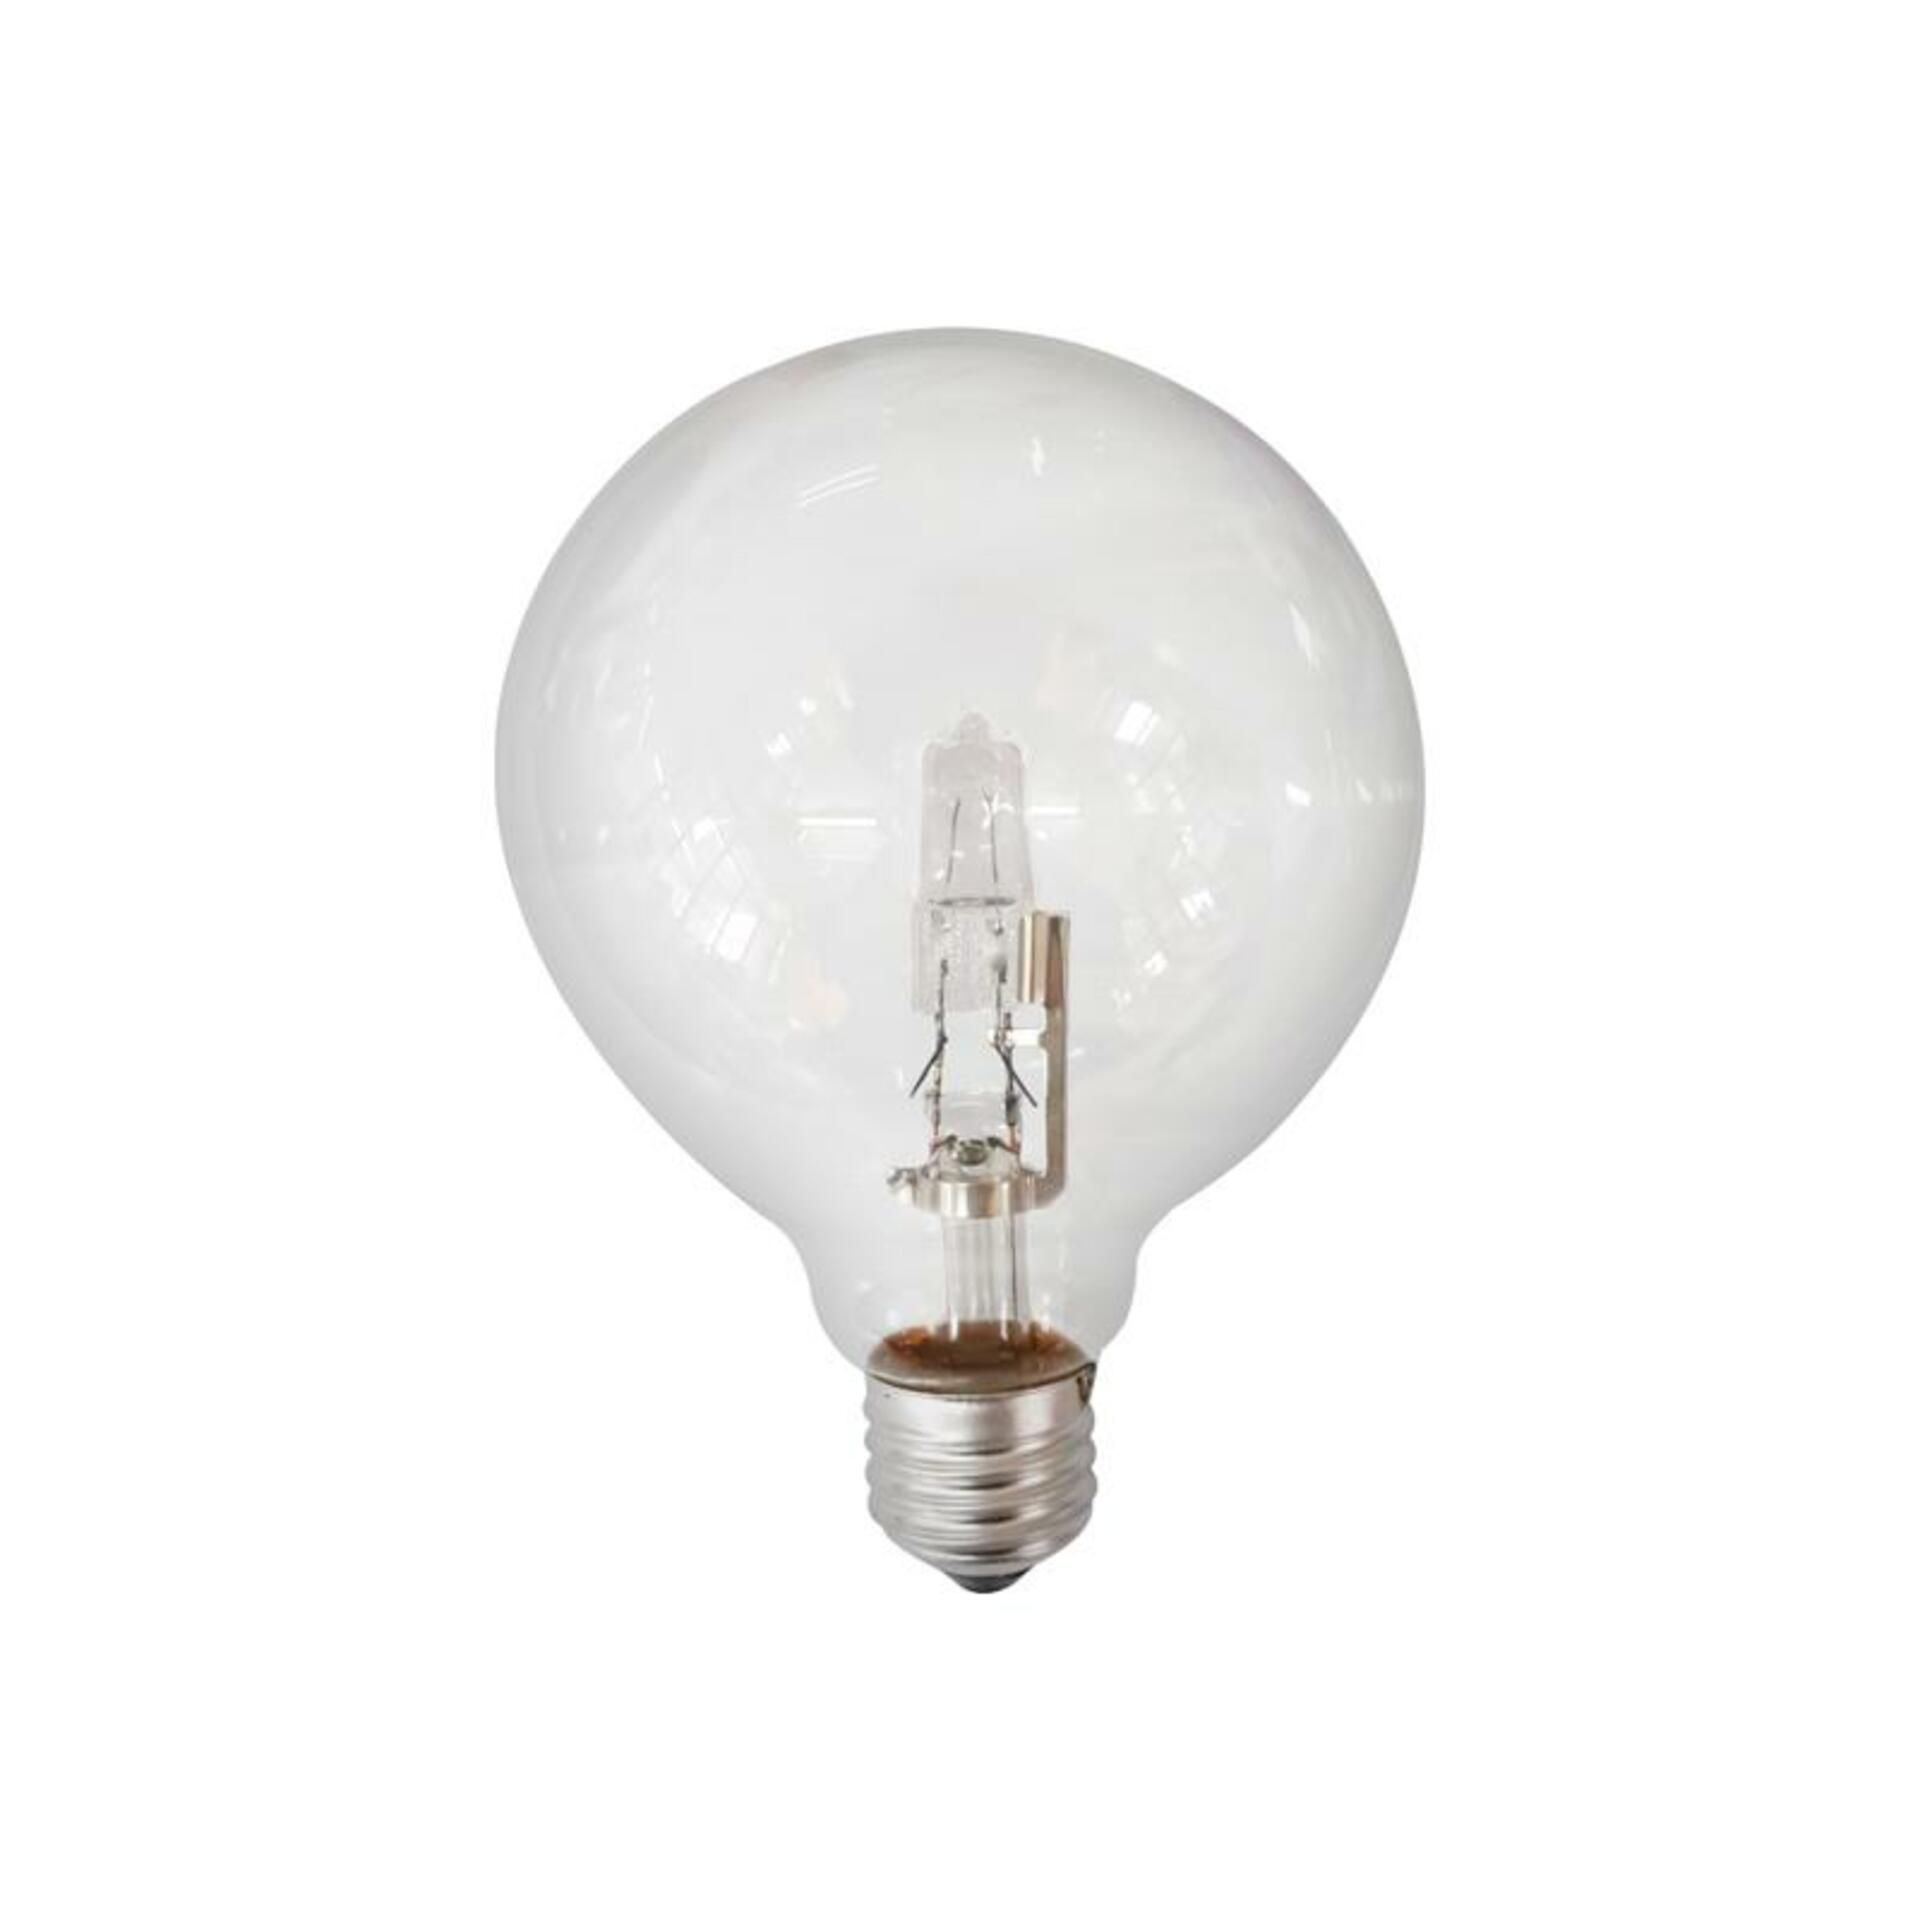 ACA Lighting HALOGEN ENERGY SAVER GLOBE D80 70W E27 186027070